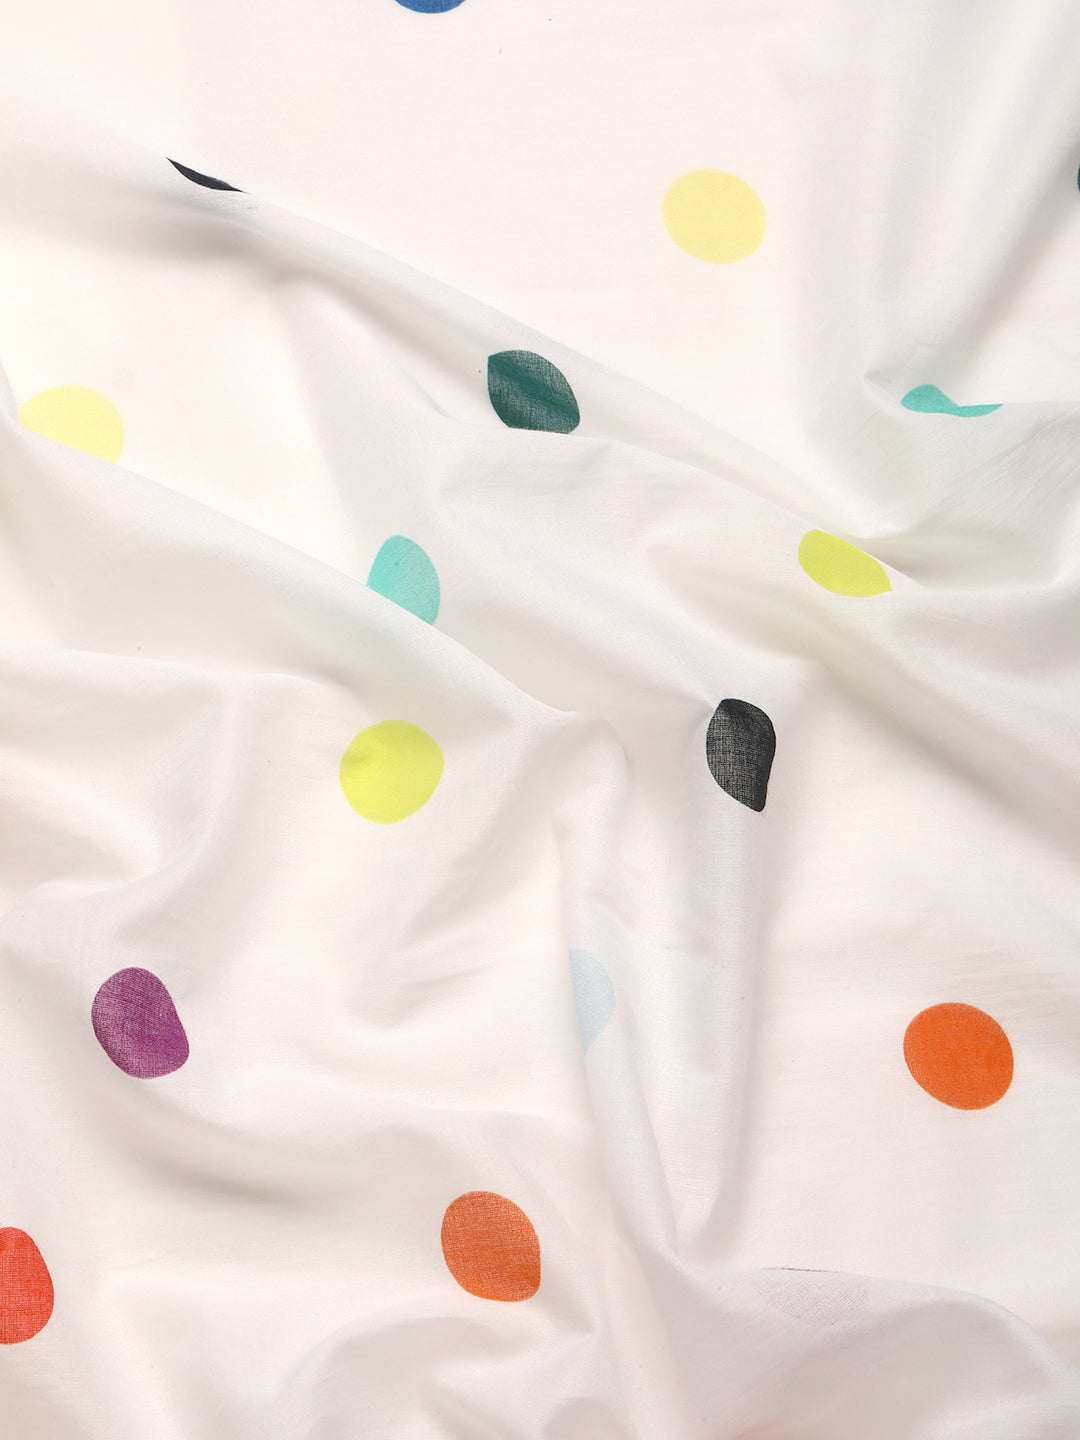 Buta Buti Multi Colour Polka Dots  Printed Pure Cotton Saree With Unstitched Blouse